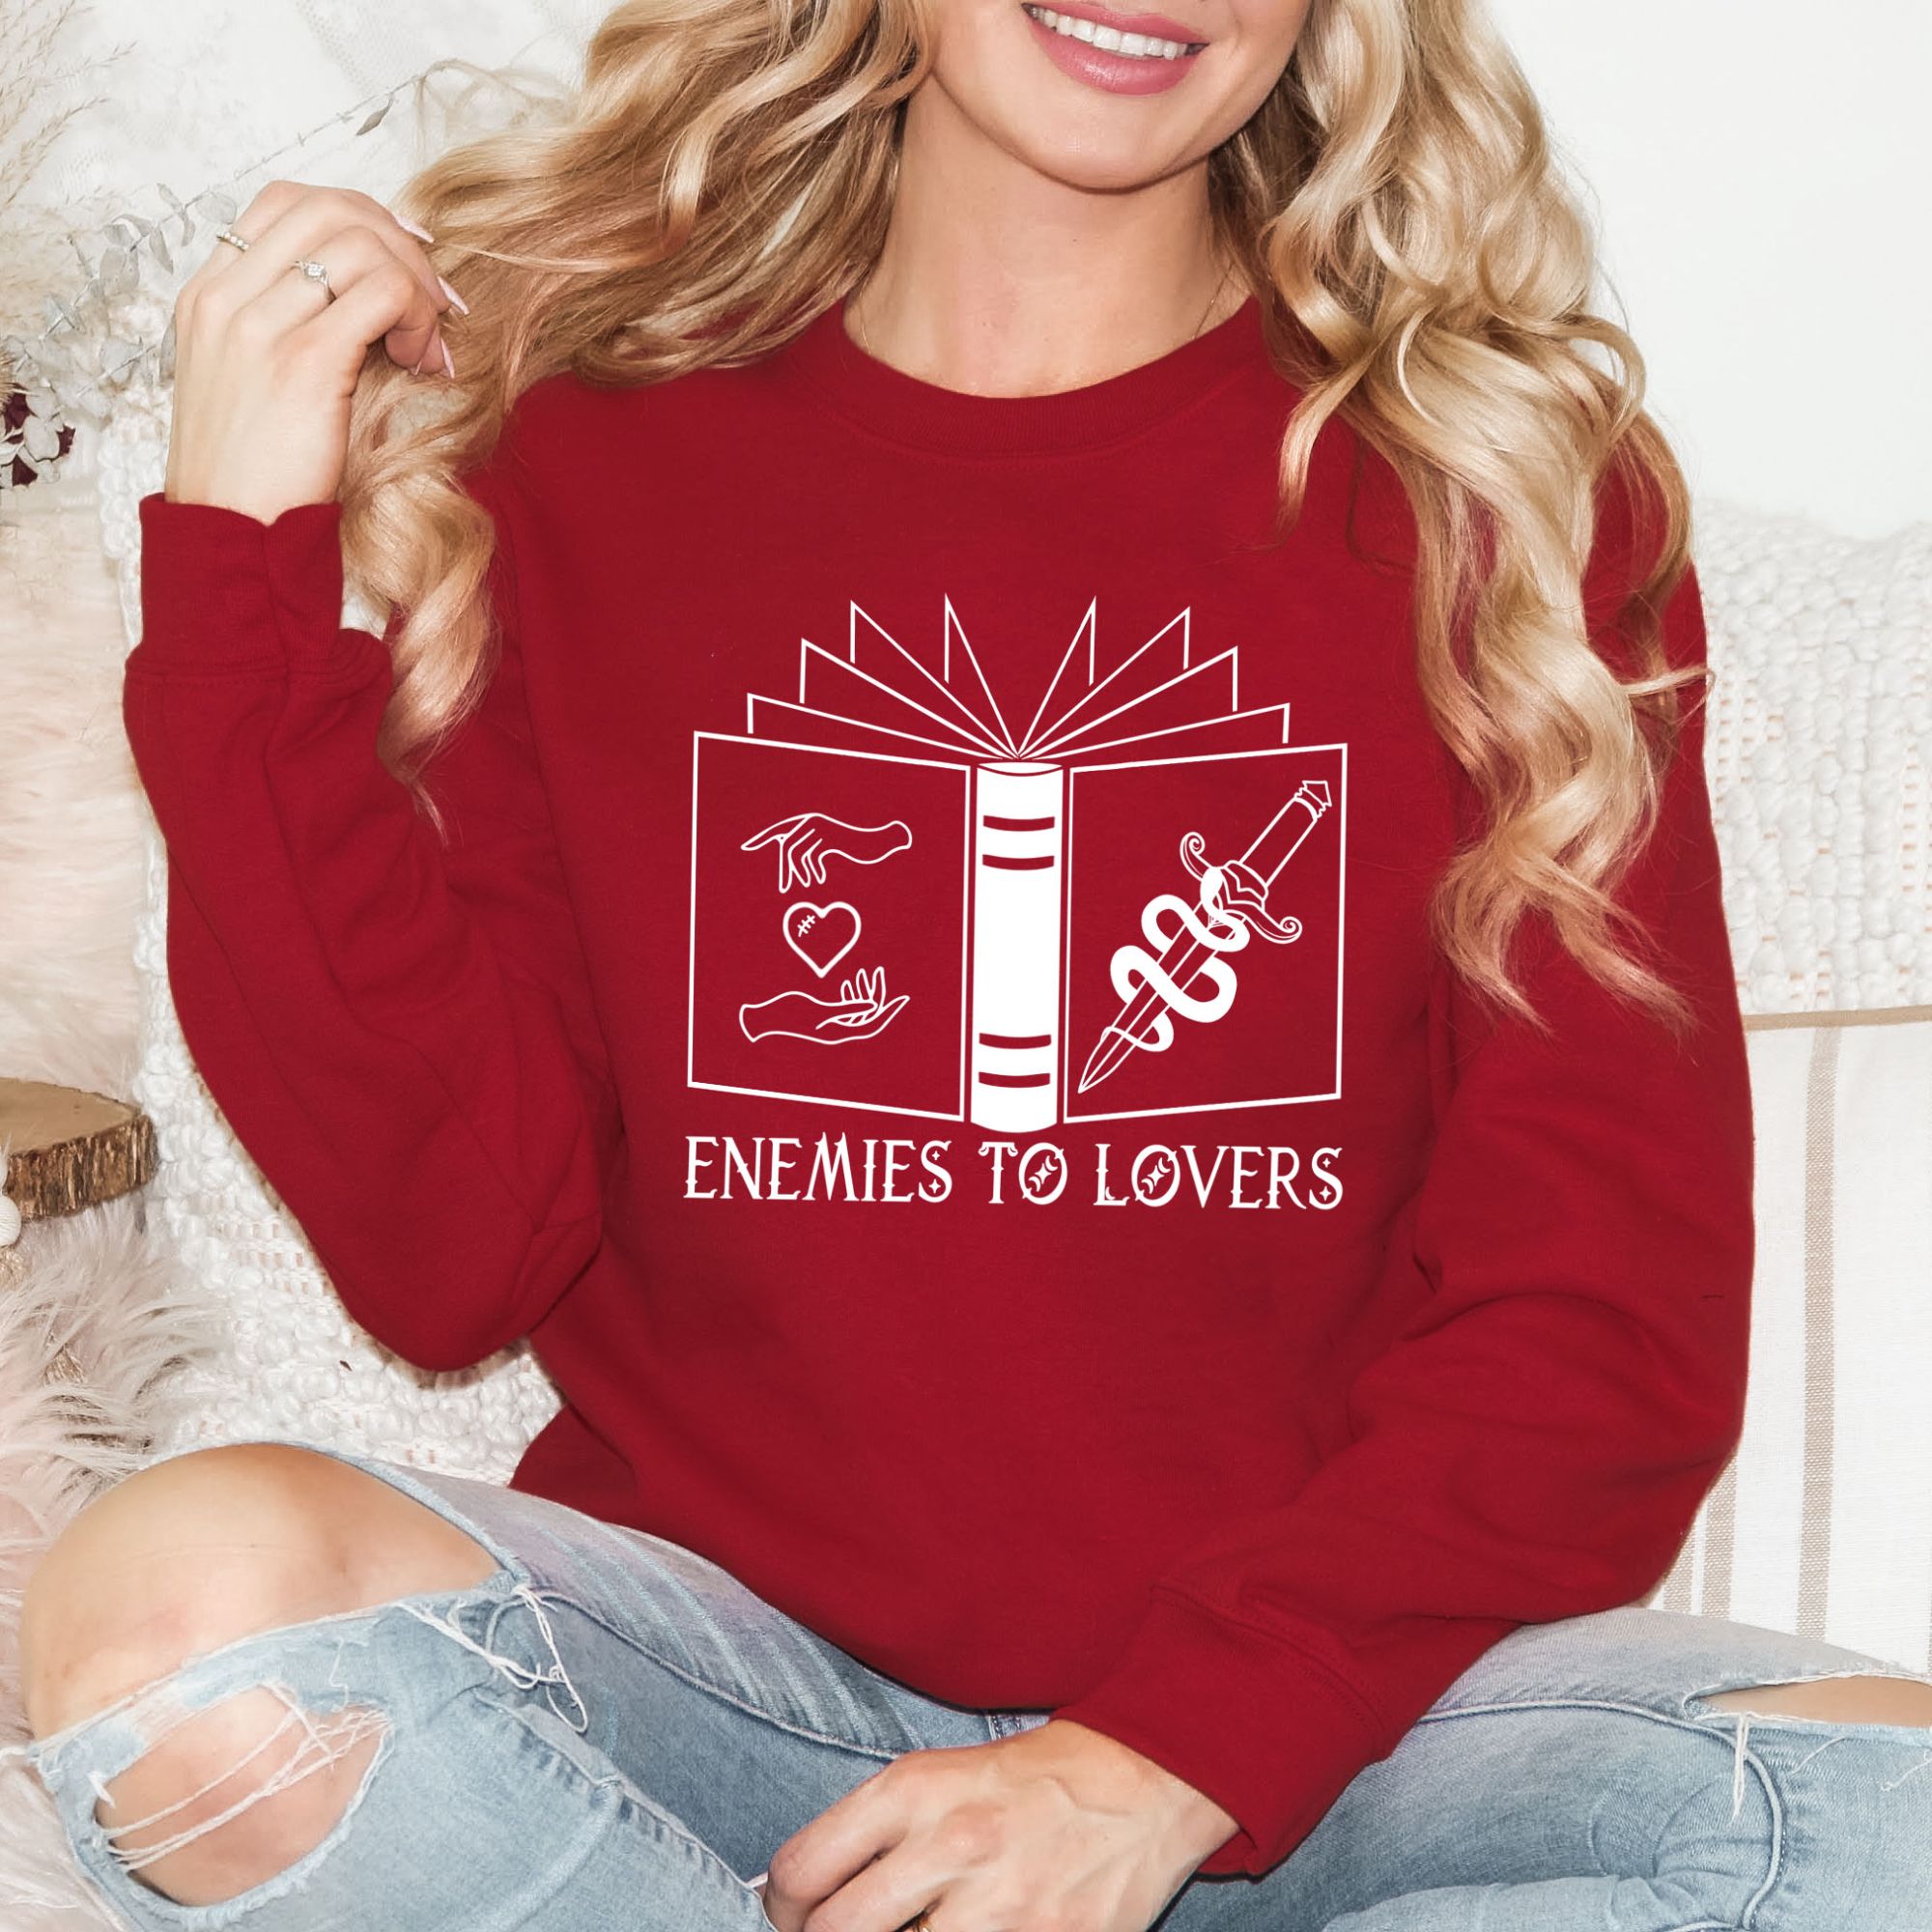                       Enemies to Lovers Sweatshirt                      Books & Coffee Christmas Sweatshirt